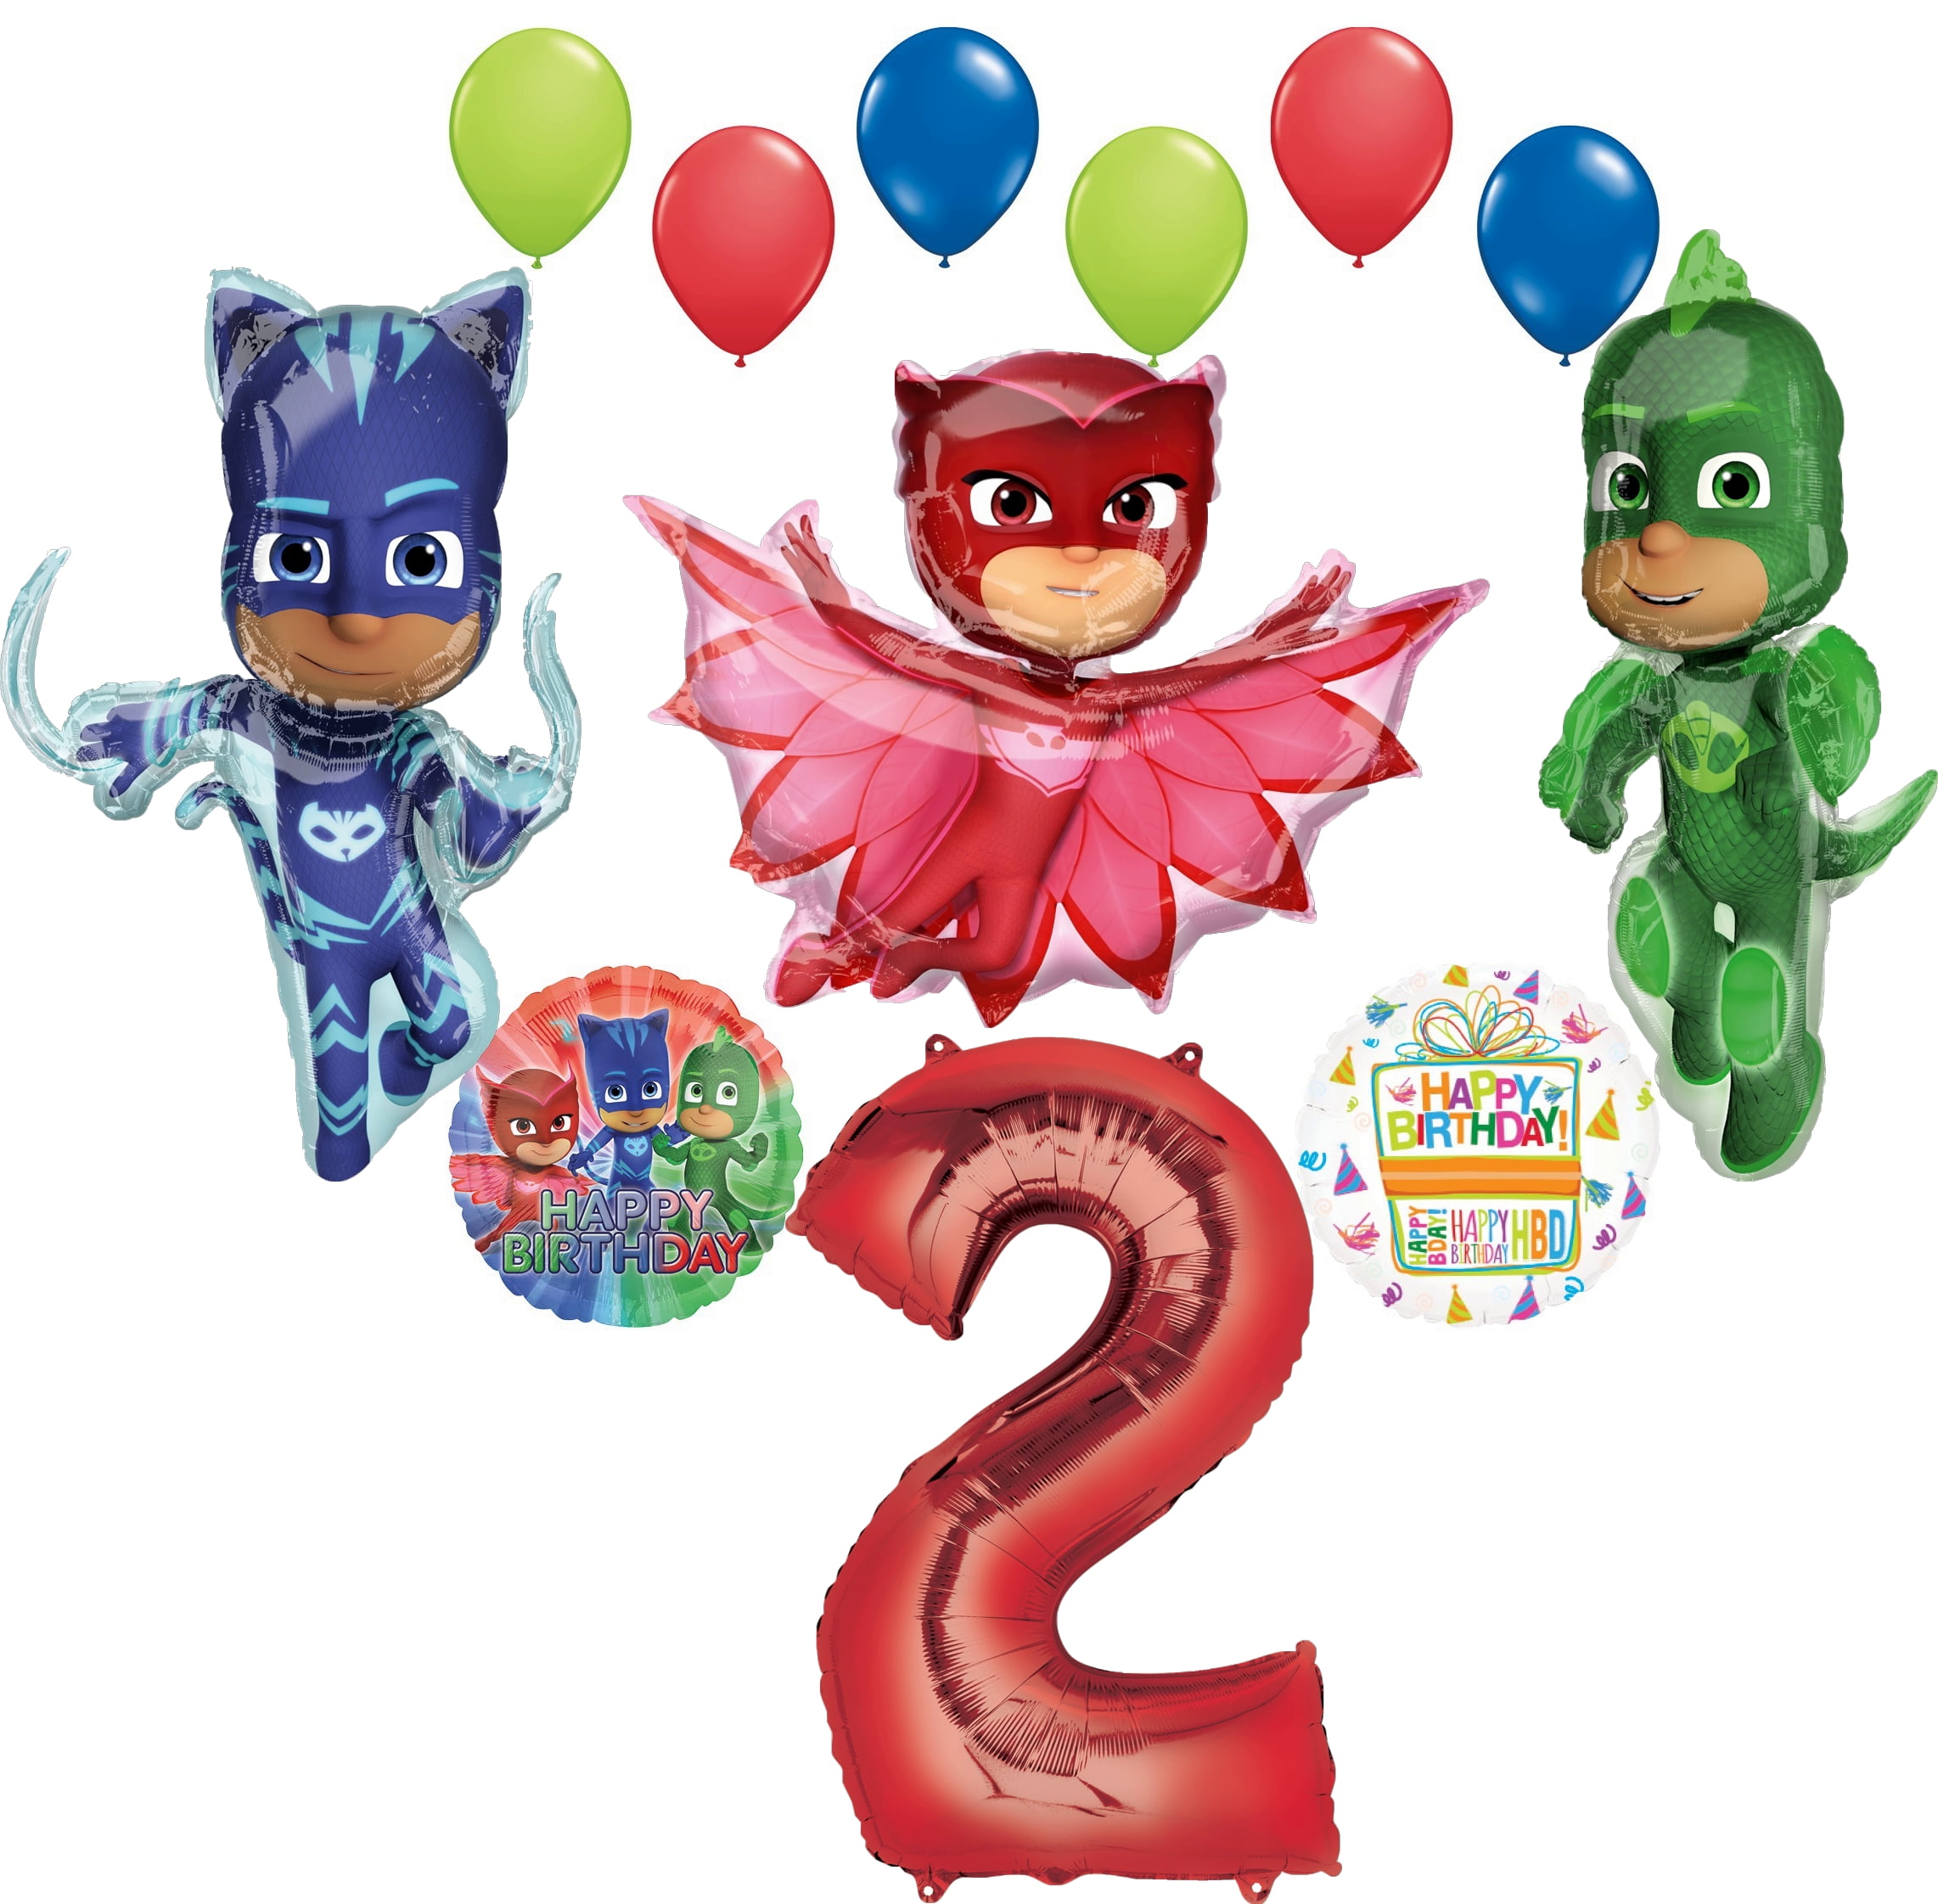 PJ Masks 6" Speaking Talking Gekko Figure doll Birthday Party Game Toy Gift 